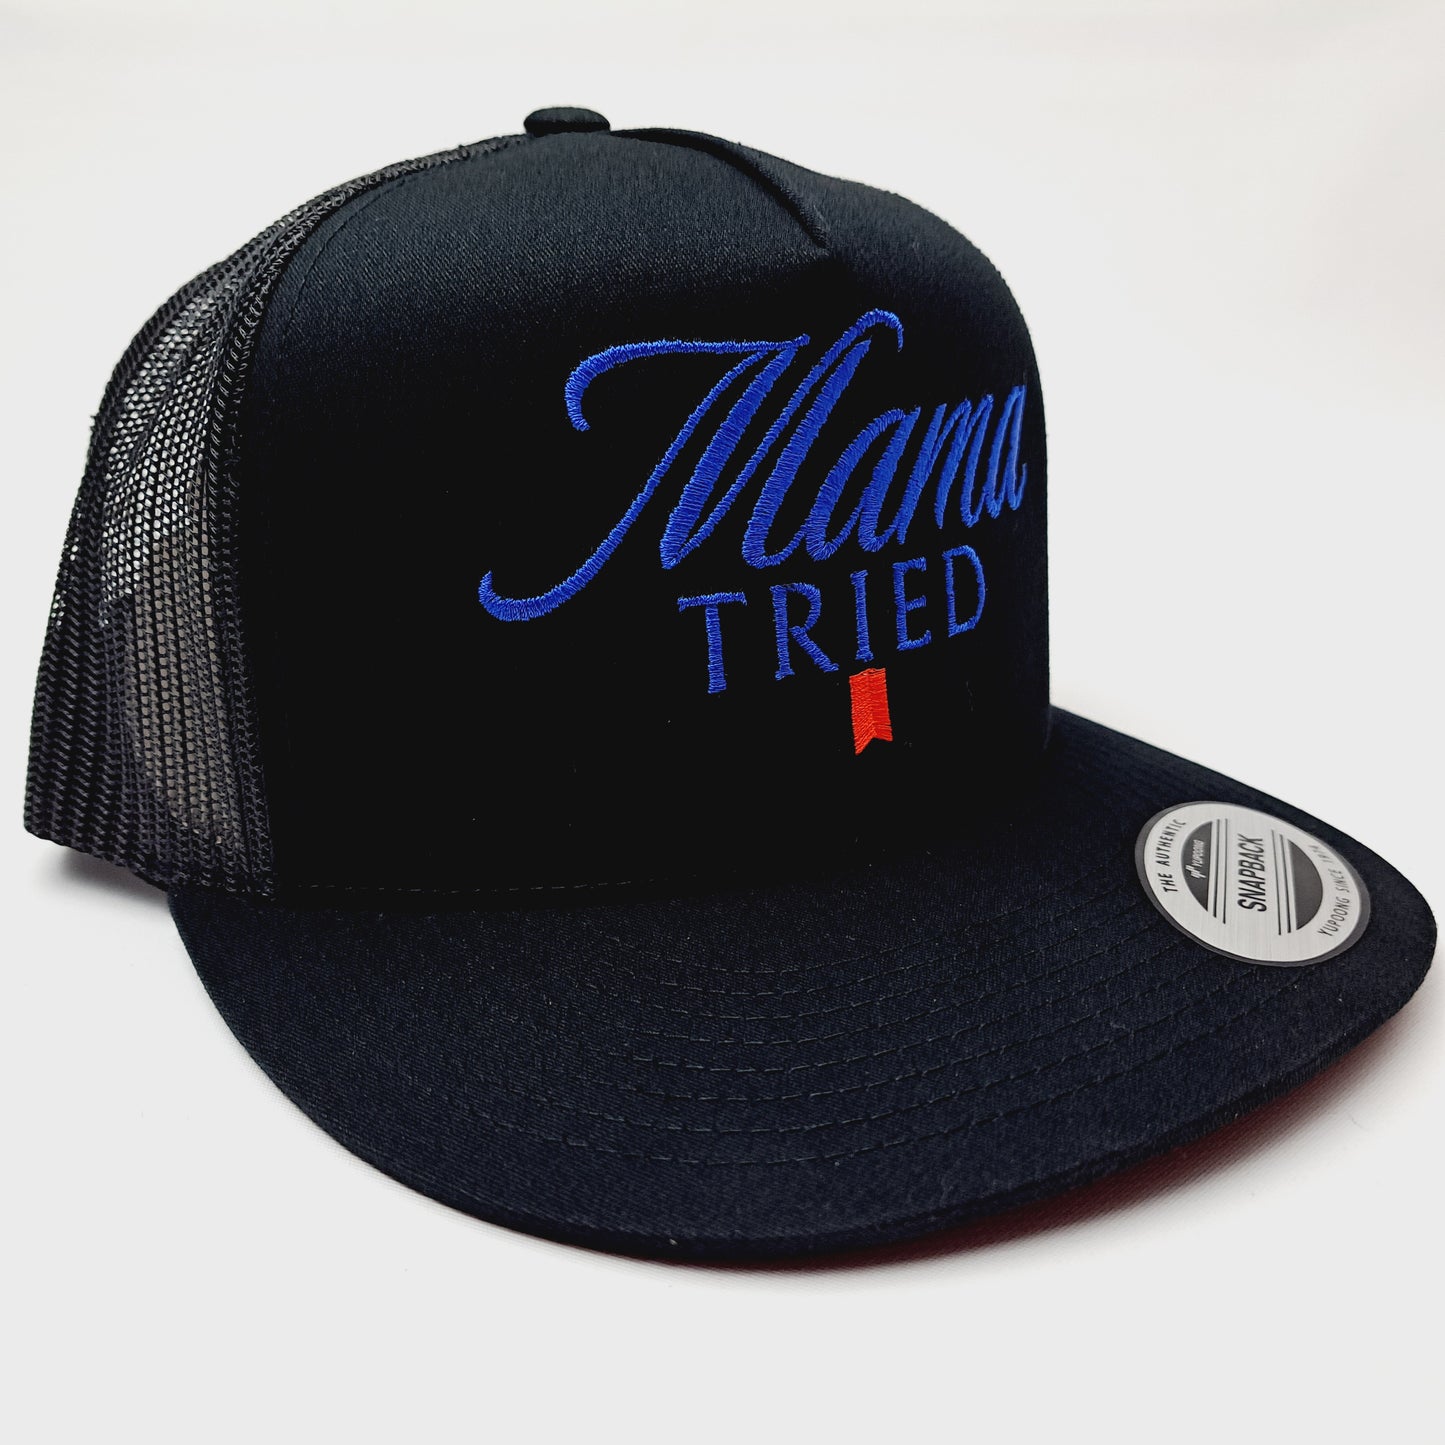 Mama Tried Flat Bill High-profile Trucker Mesh Snapback Cap Hat White